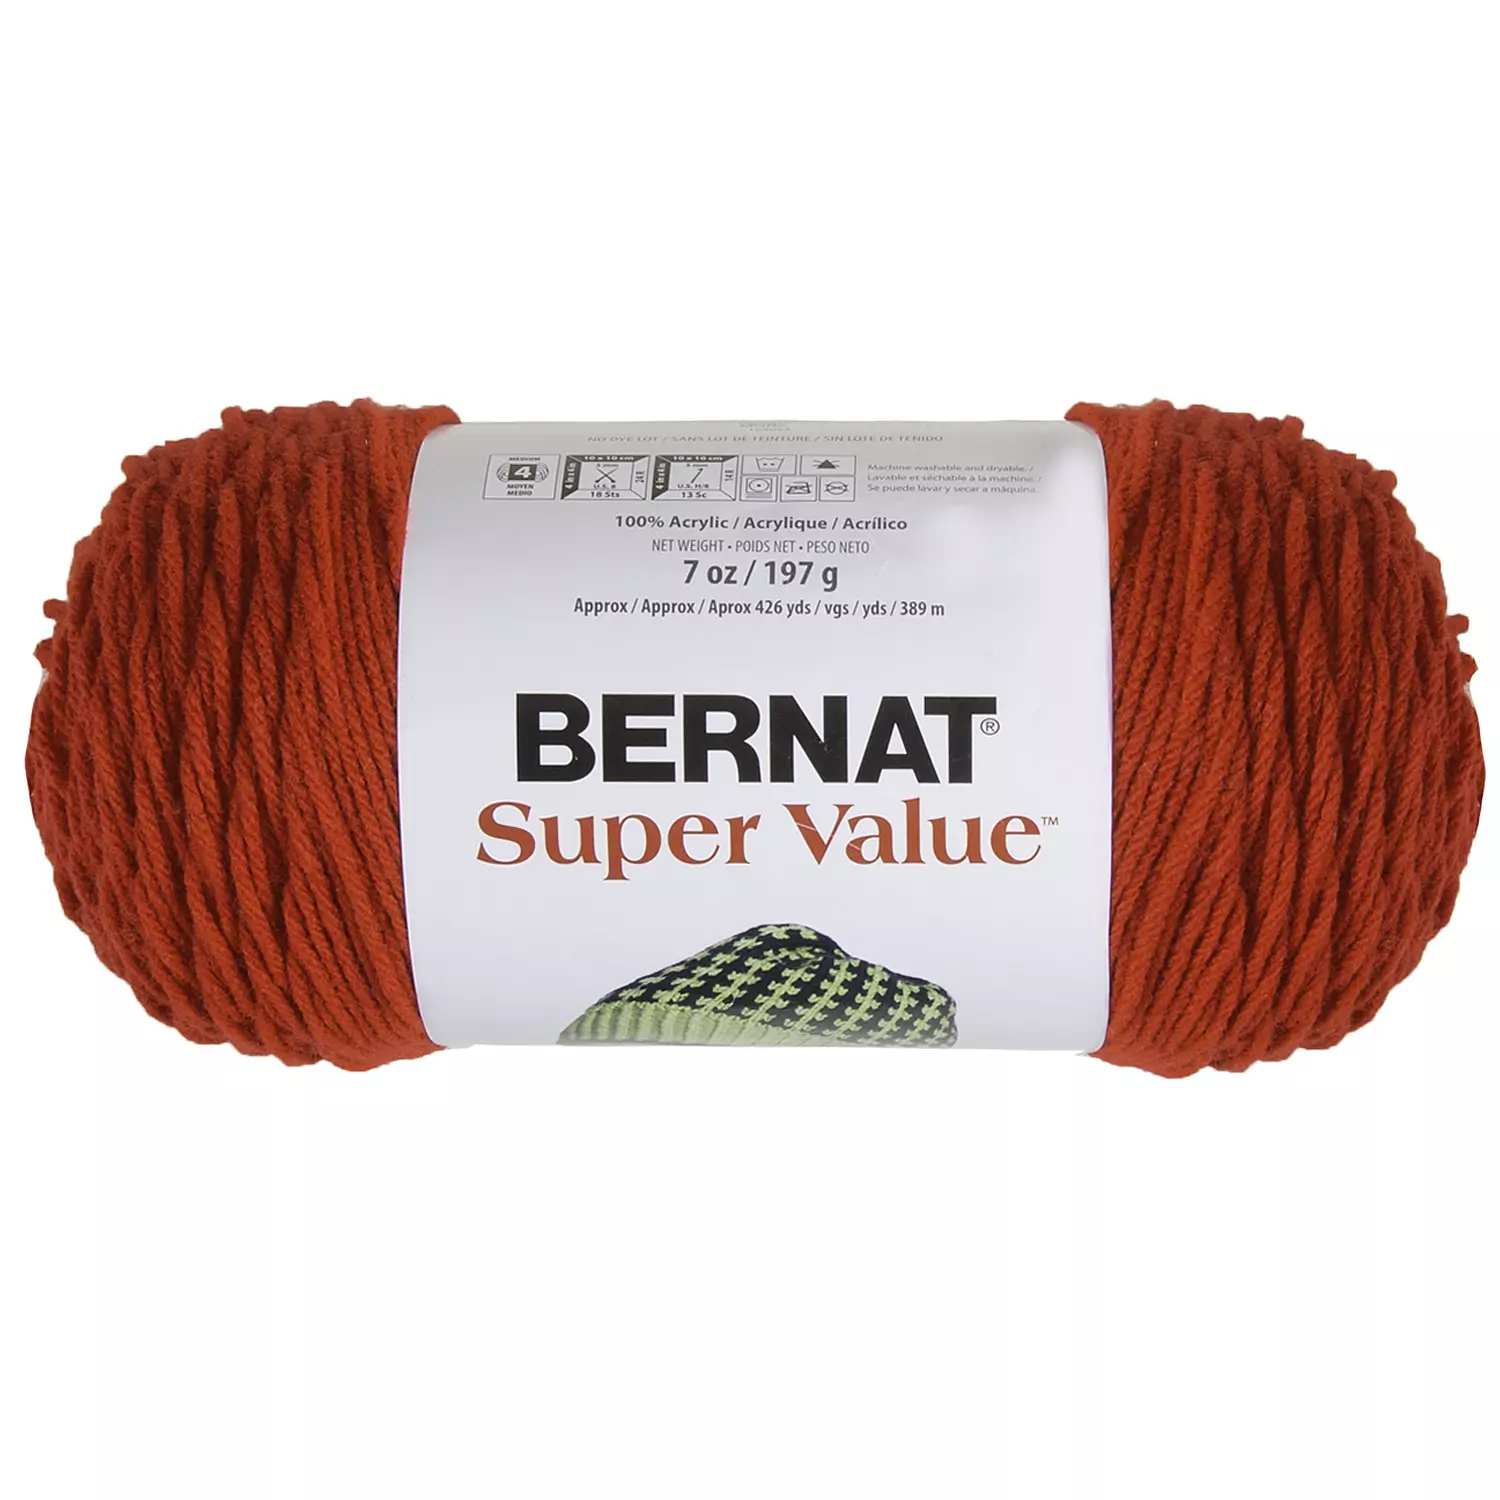 Bernat Super Value - Acrylic yarn, berry